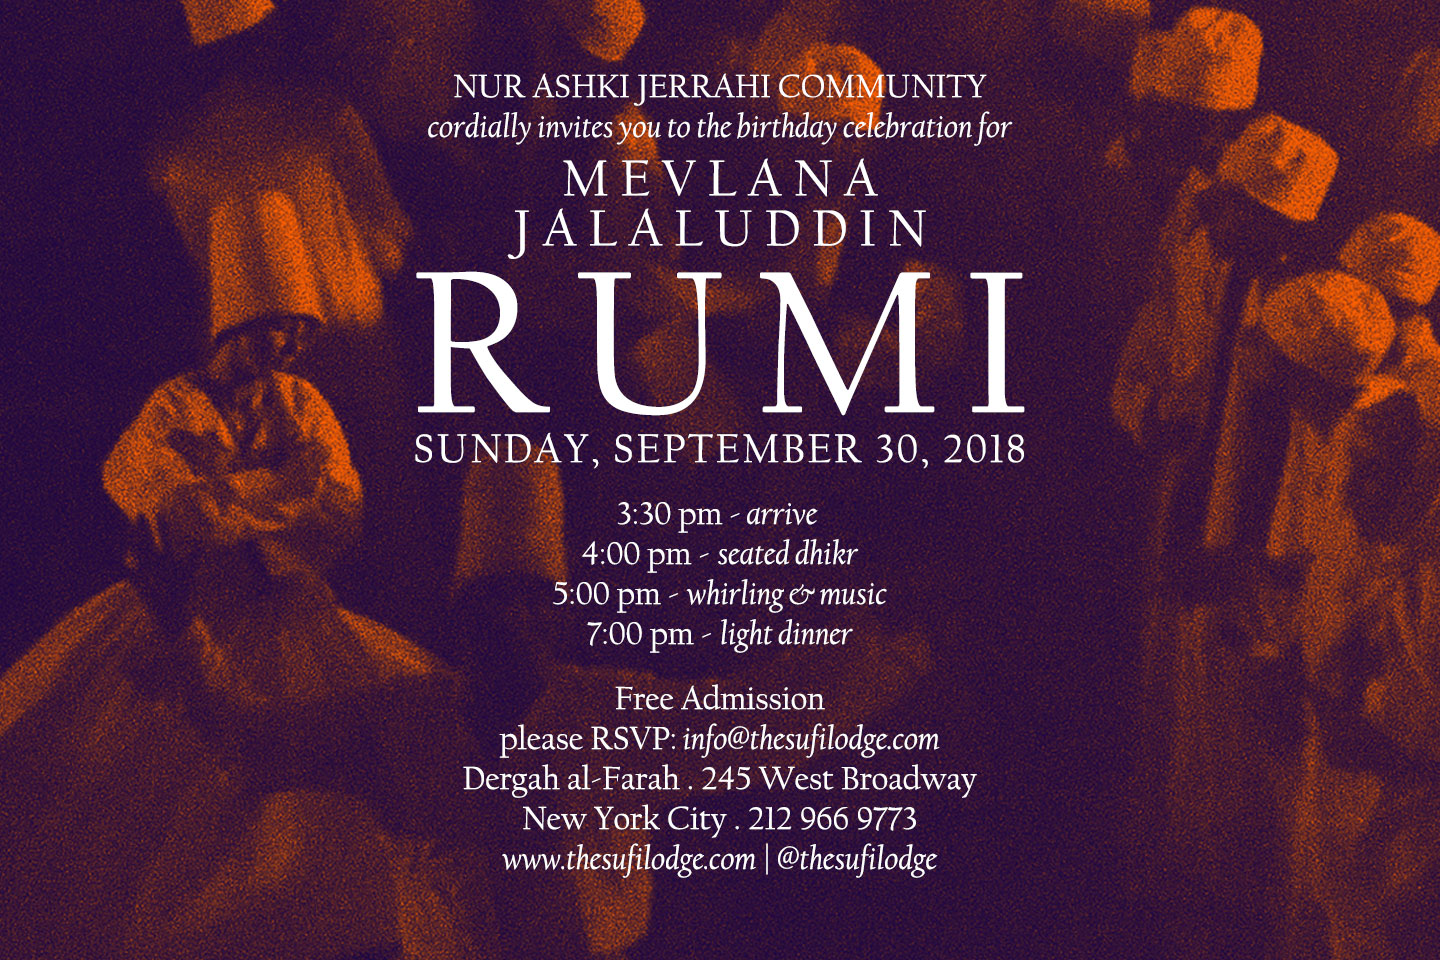 Sunday, September 30, 2018 | Birthday Celebration for Mevlana Jalaluddin Rumi | 3:30 pm | Free Admission